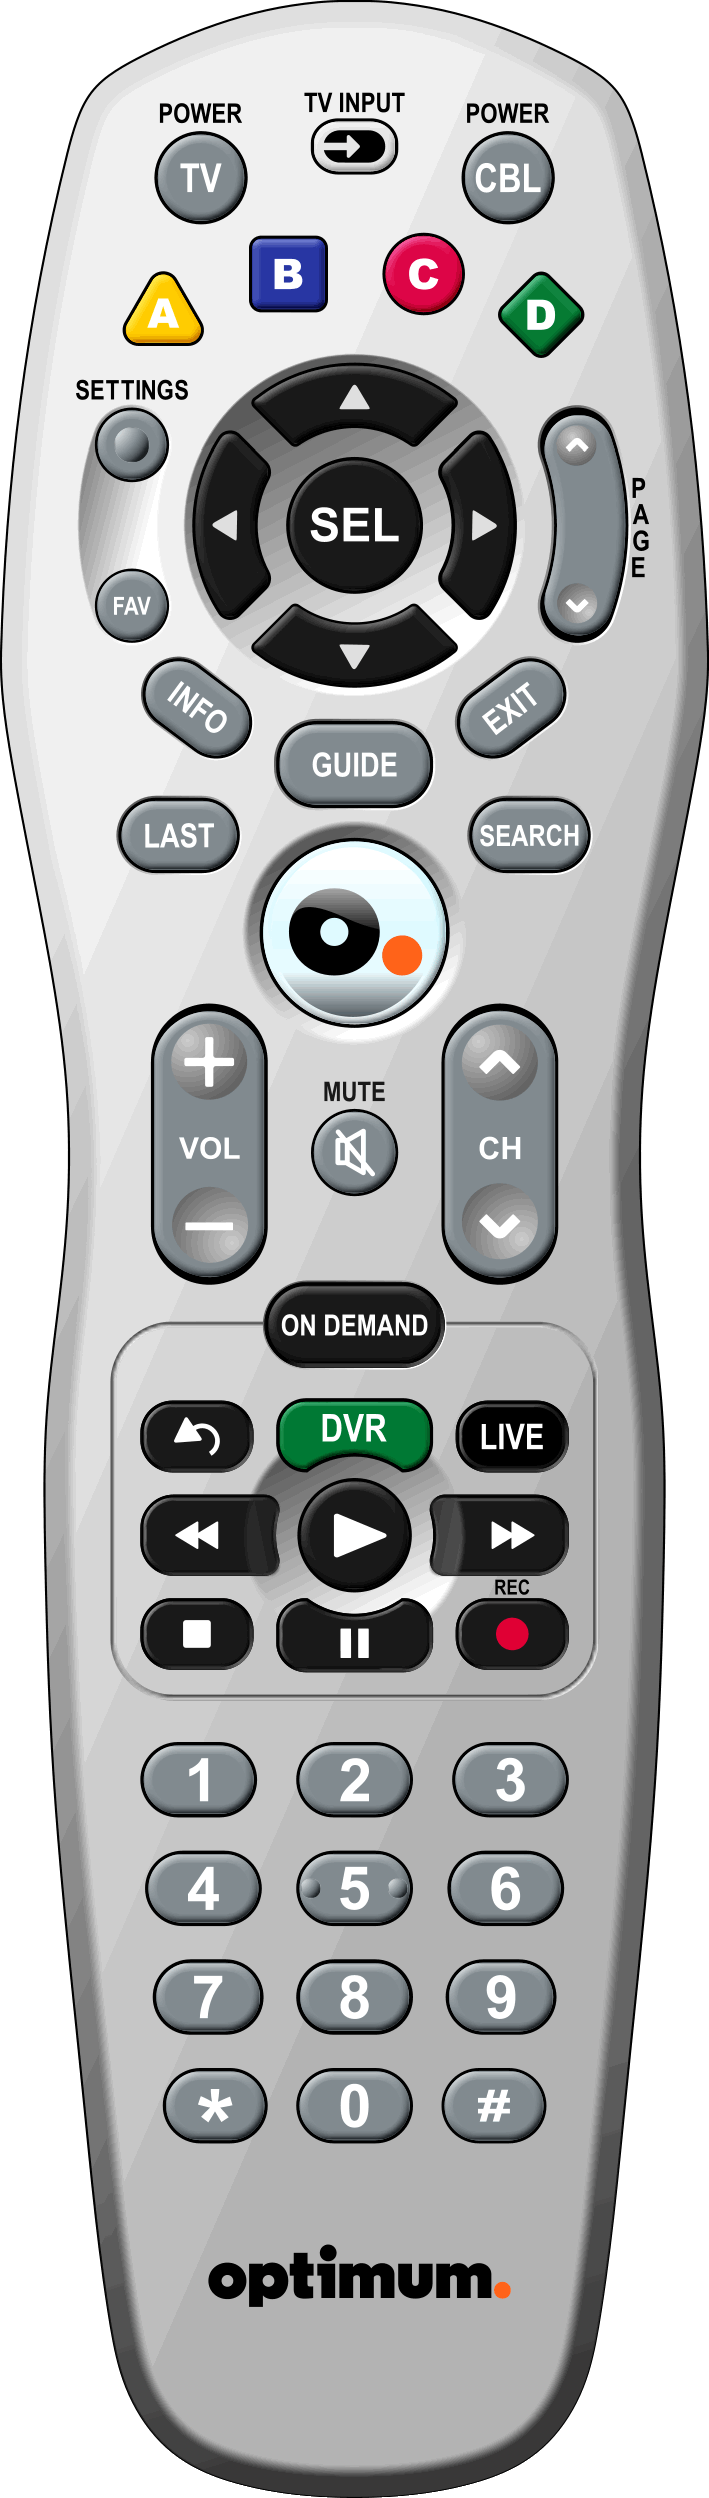 Where do you find remote control manuals?